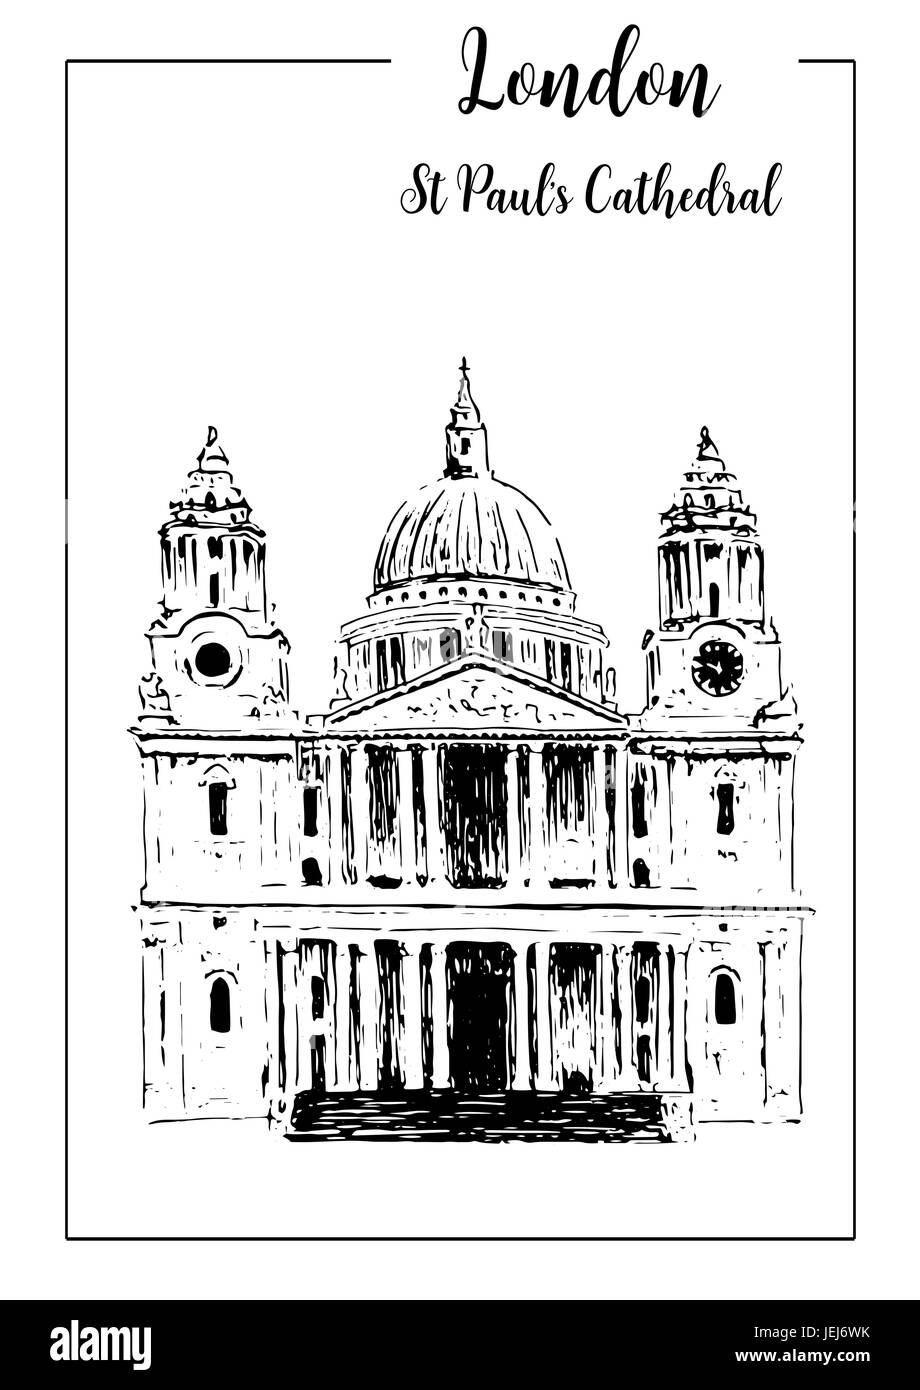 London-Symbol St. Pauls Cathedral. Wunderschöne handgezeichnete Skizze Vektorgrafik. Stock Vektor